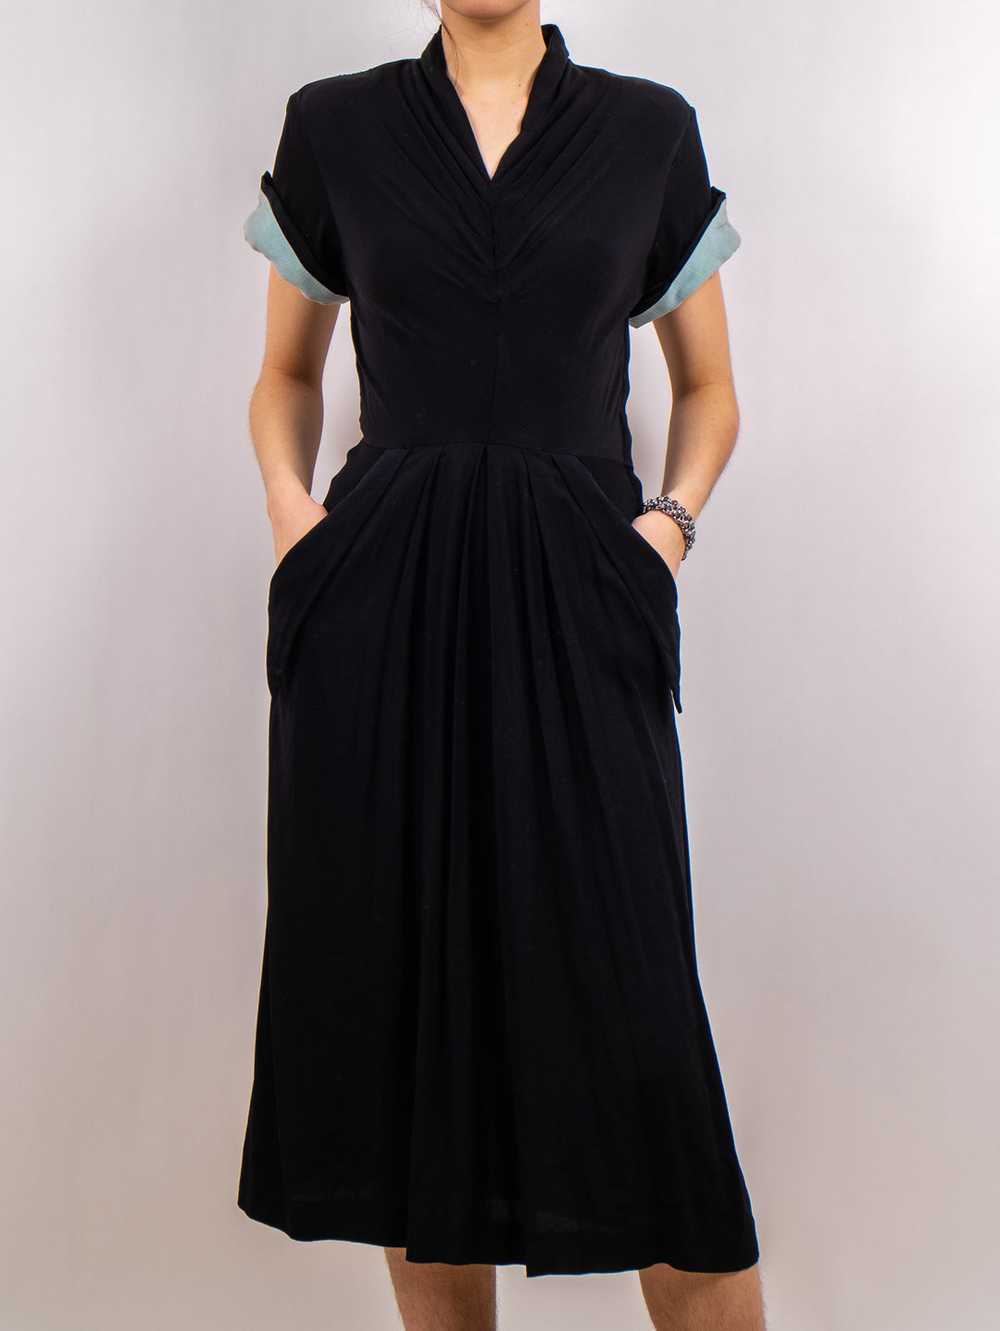 1950's swing dress - image 1